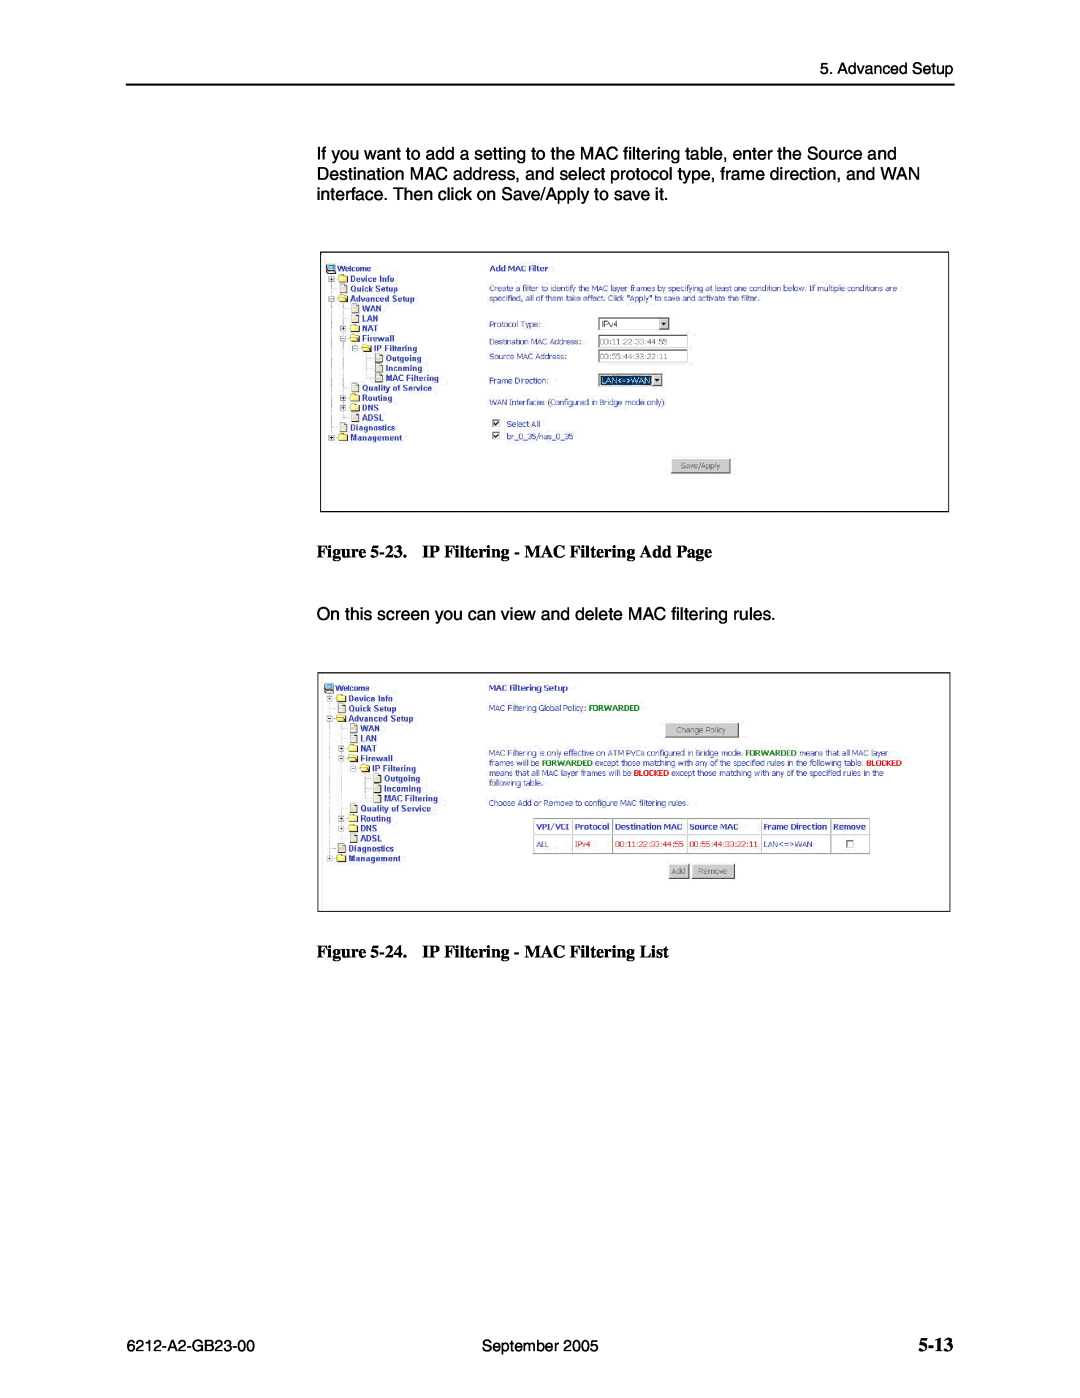 Paradyne 6212-I1 manual 5-13, 23. IP Filtering - MAC Filtering Add Page, 24. IP Filtering - MAC Filtering List 